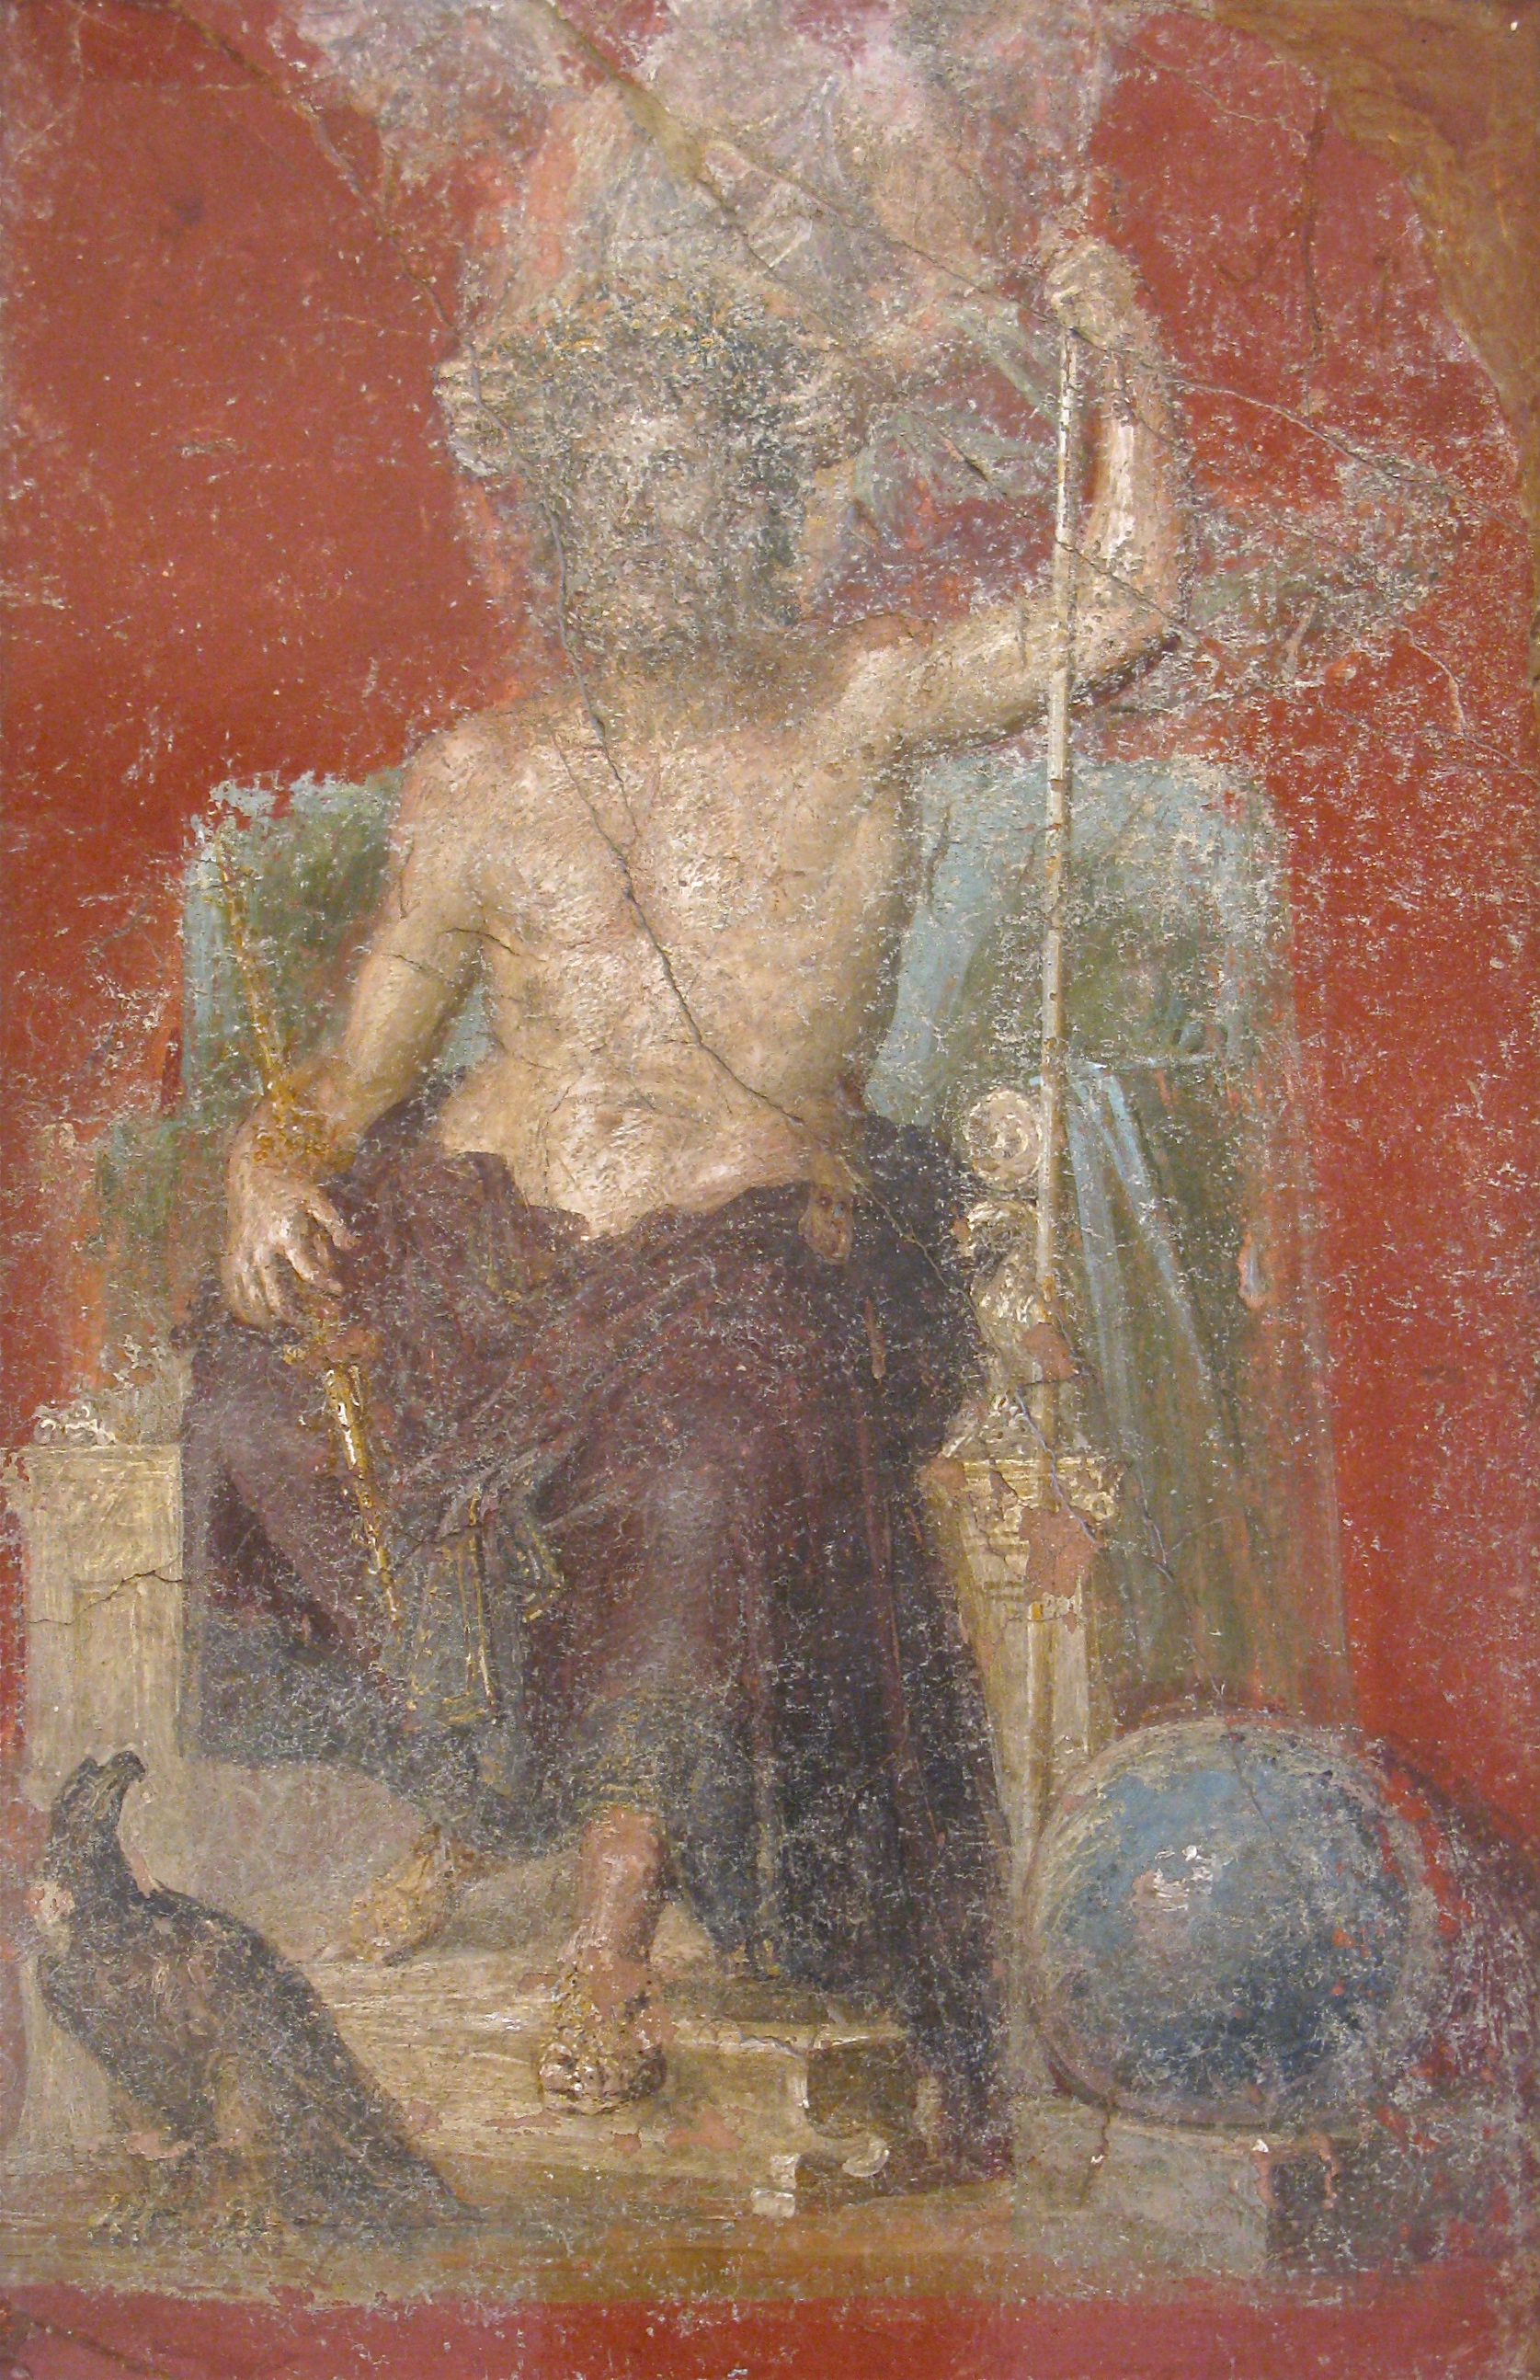 jupiter roman god painting